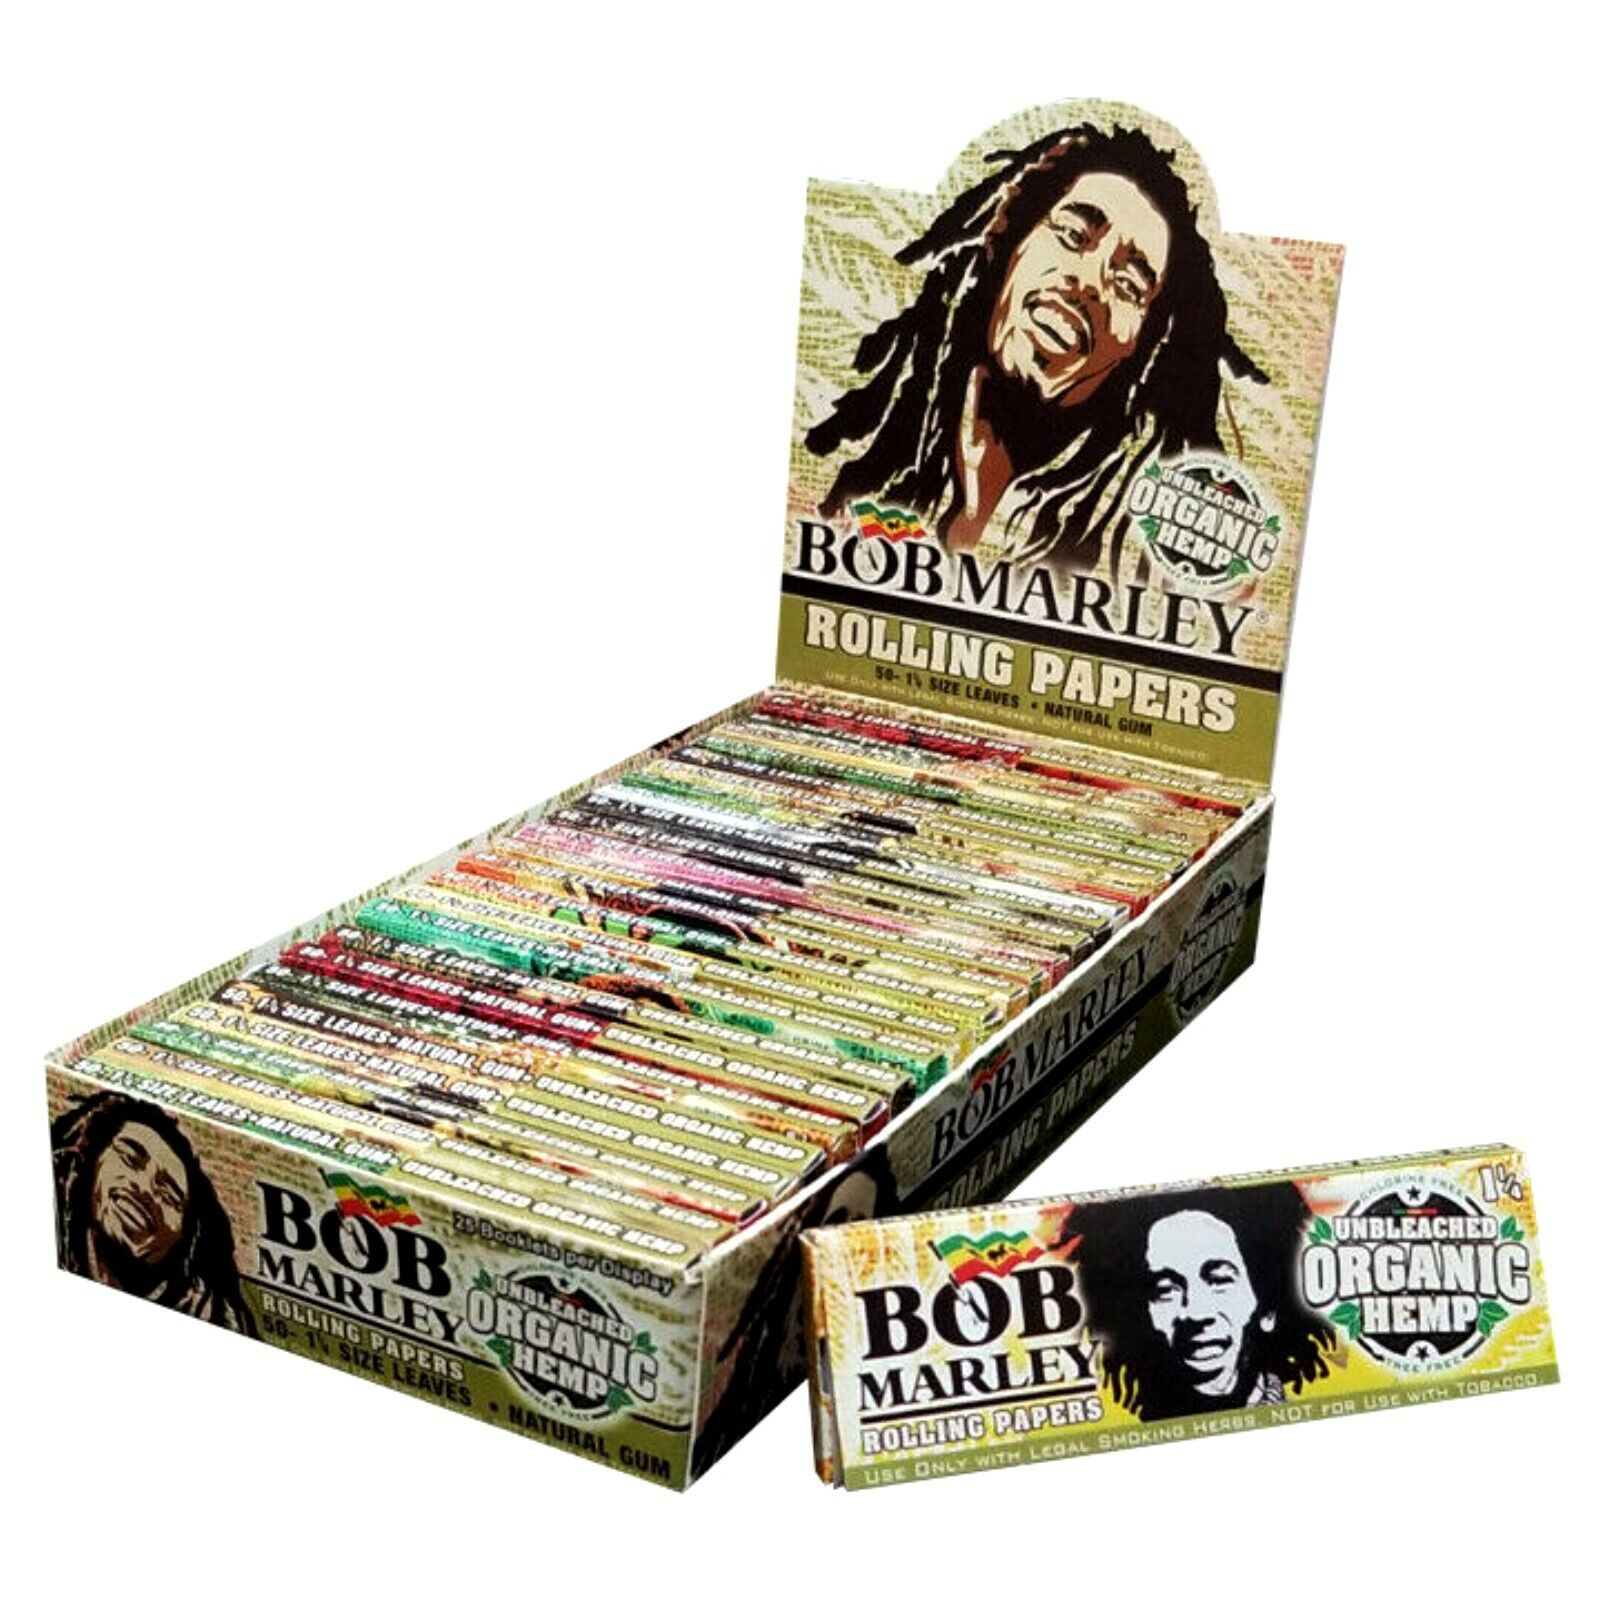 Bob Marley Unbleached Organic Hemp 1 1/4, 1.25 Rolling Papers 25 Booklet Packs